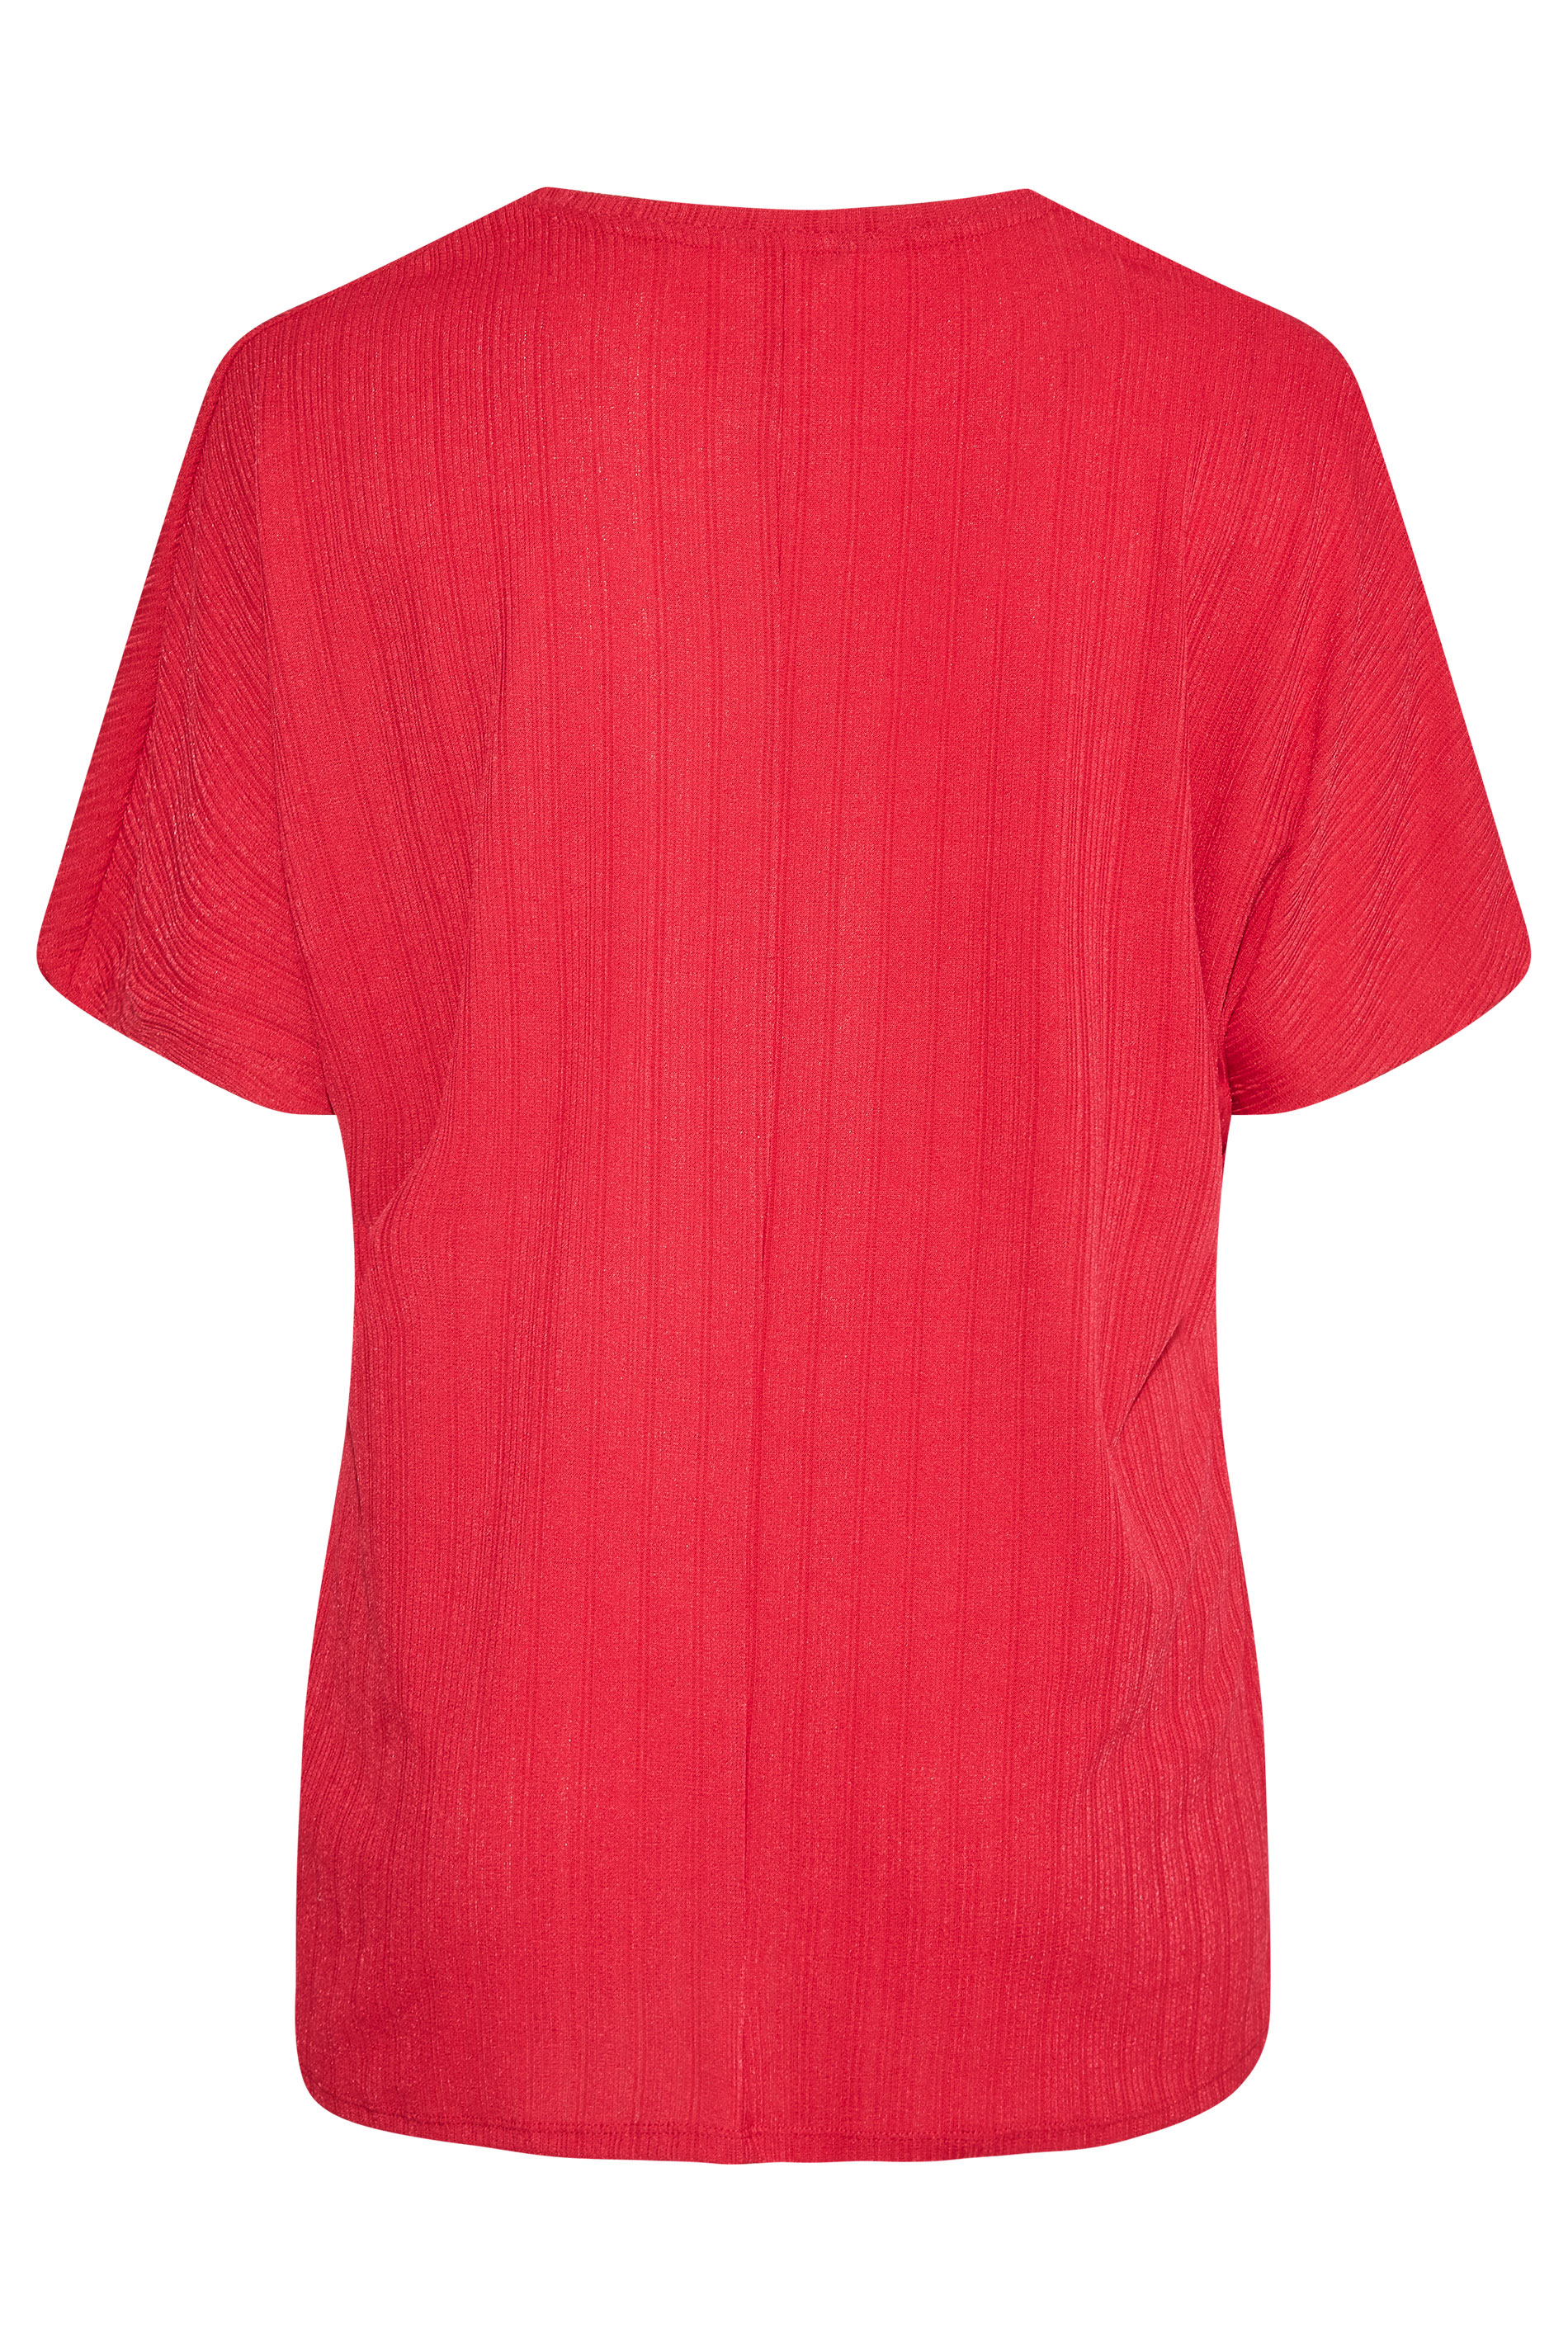 Grande taille  Tops Grande taille  Tops Jersey | T-Shirt Rouge Volanté Style Nervuré - FR37470